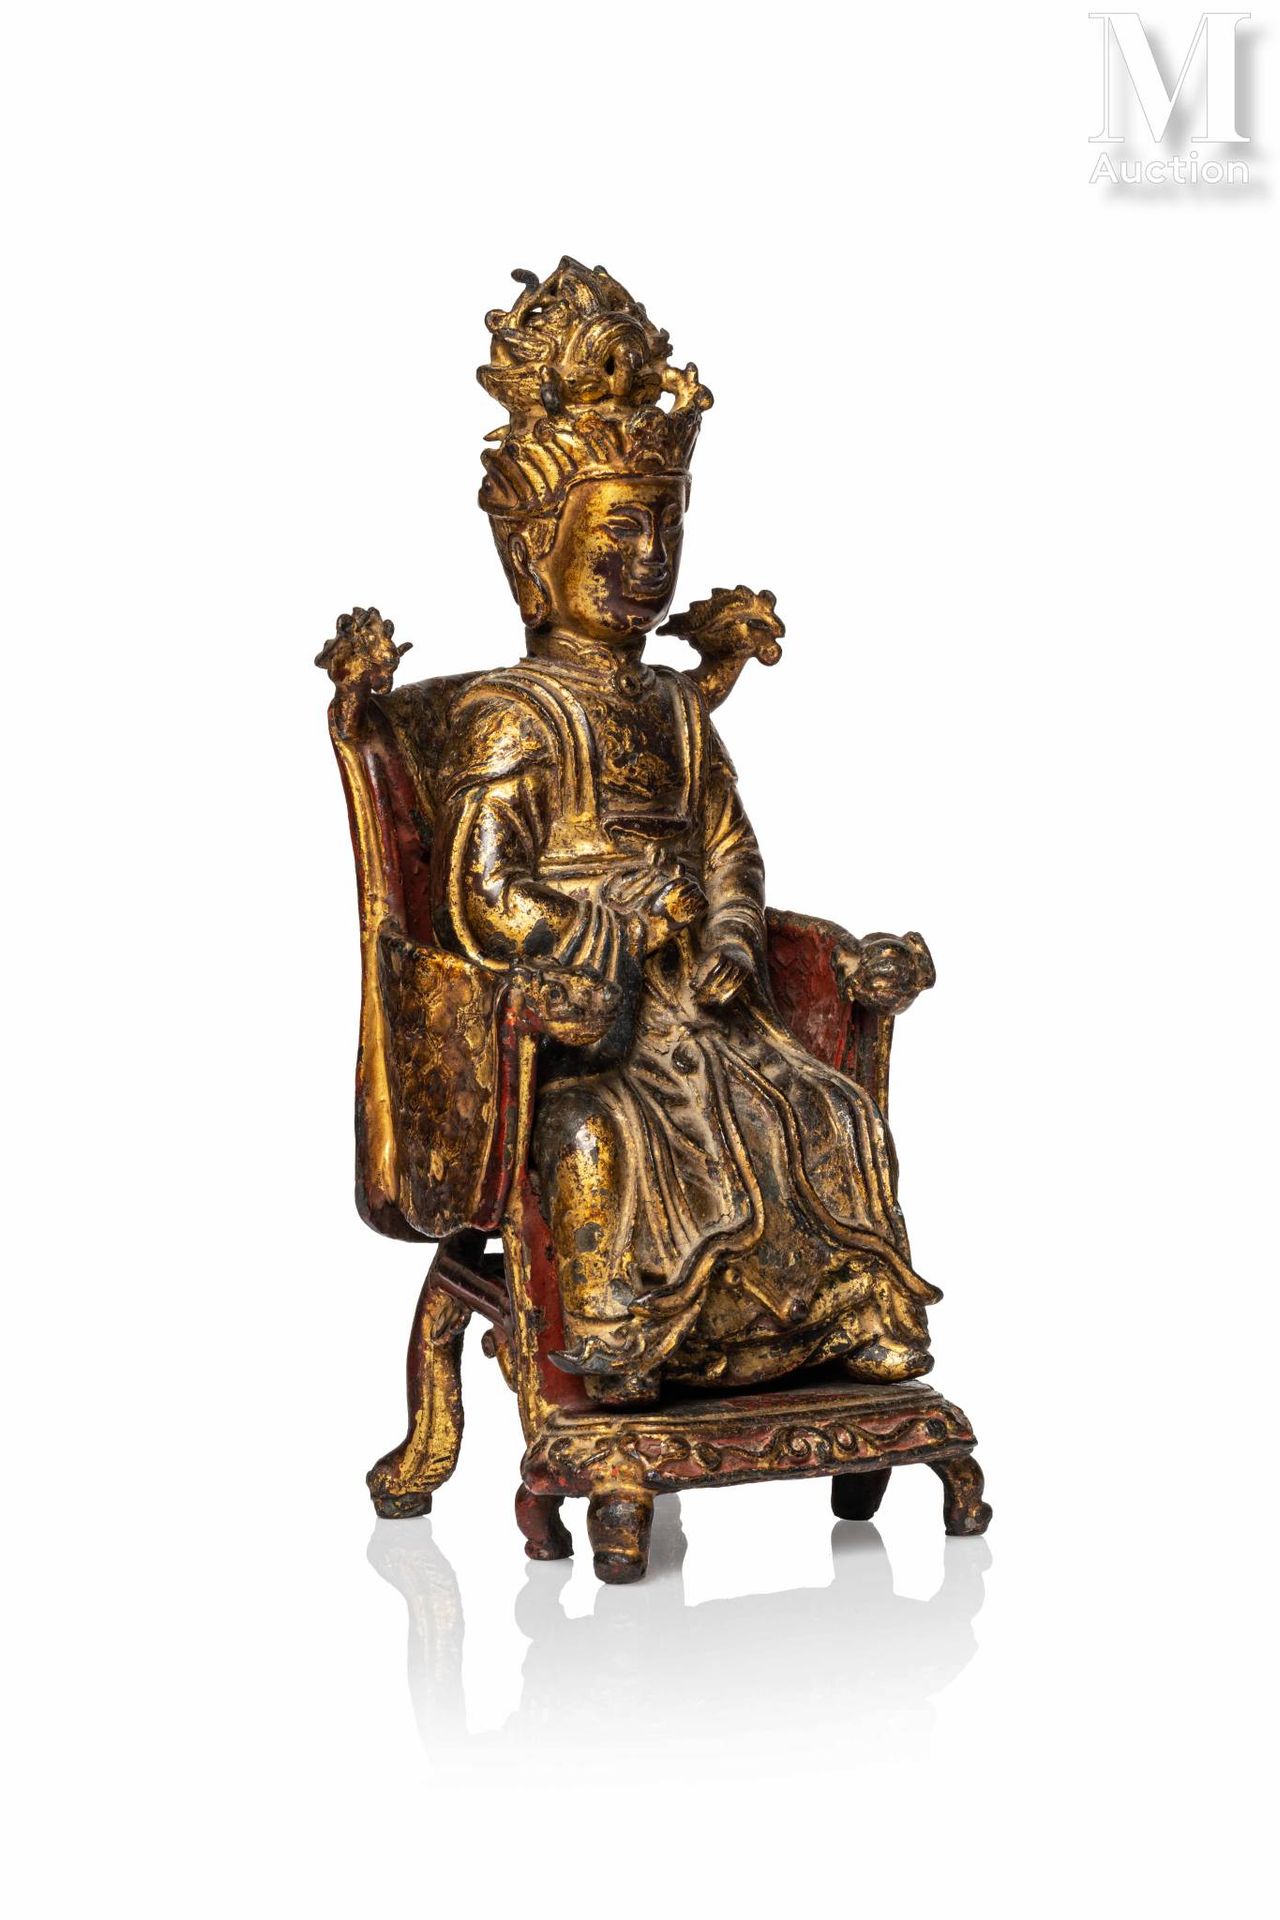 CHINE, Epoque Ming, XVIIe siècle 漆器和镀金青铜雕像

描绘了一位面容安详、半闭着眼睛、戴着大头饰、穿着精致长袍、一手举在腰间的&hellip;